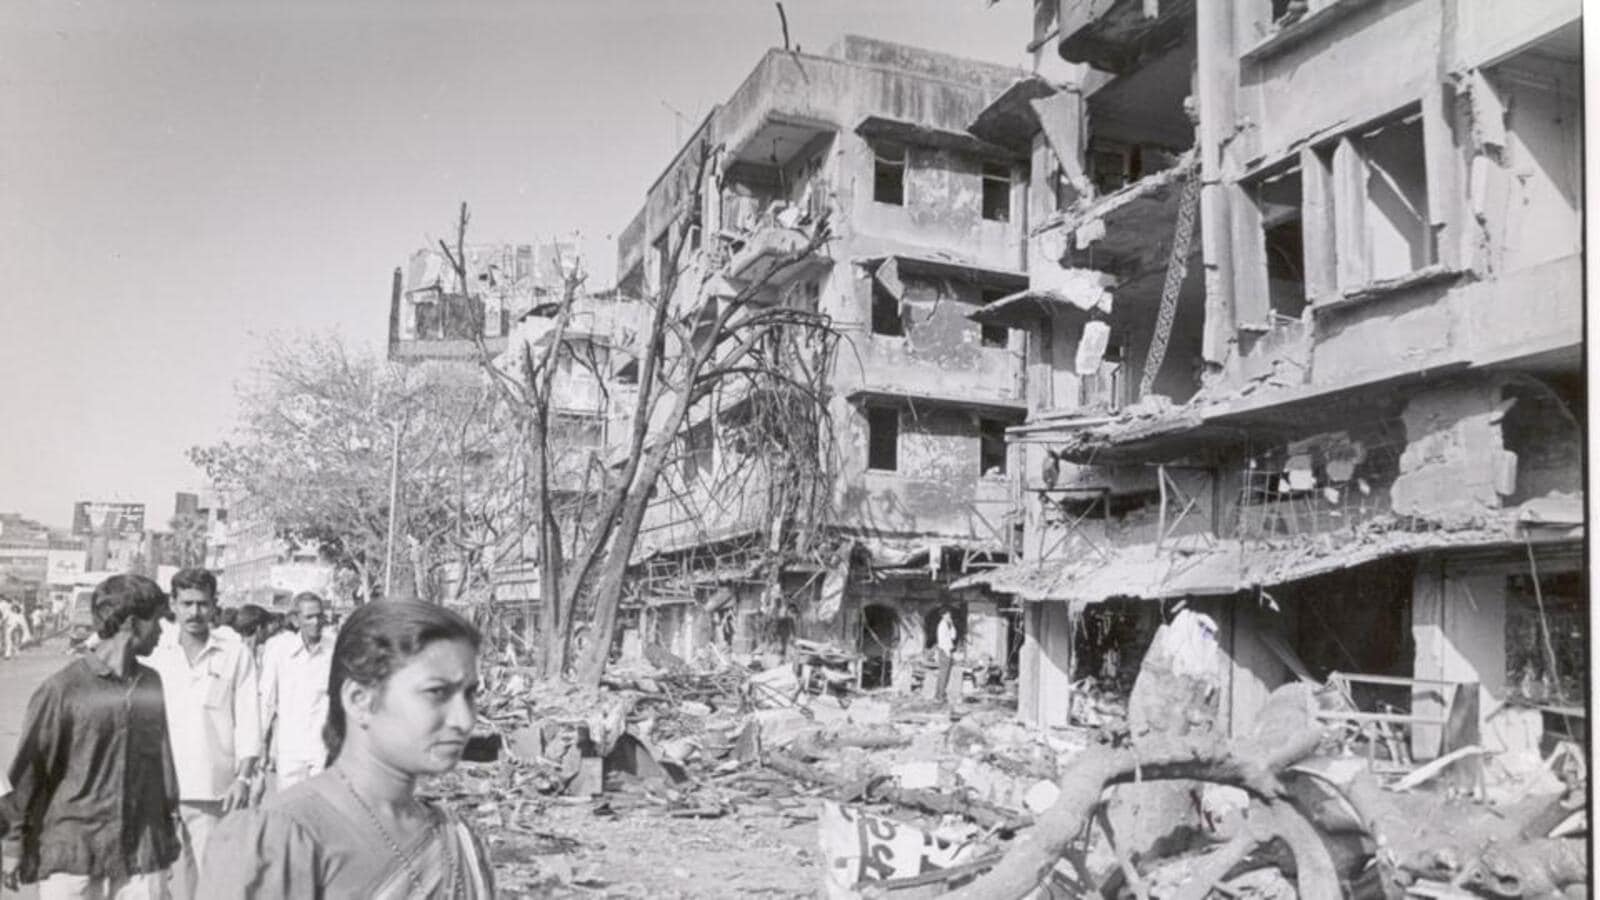 29 years on, 4 men wanted in 1993 Mumbai blasts case held in Gujarat | Latest News India - Hindustan Times